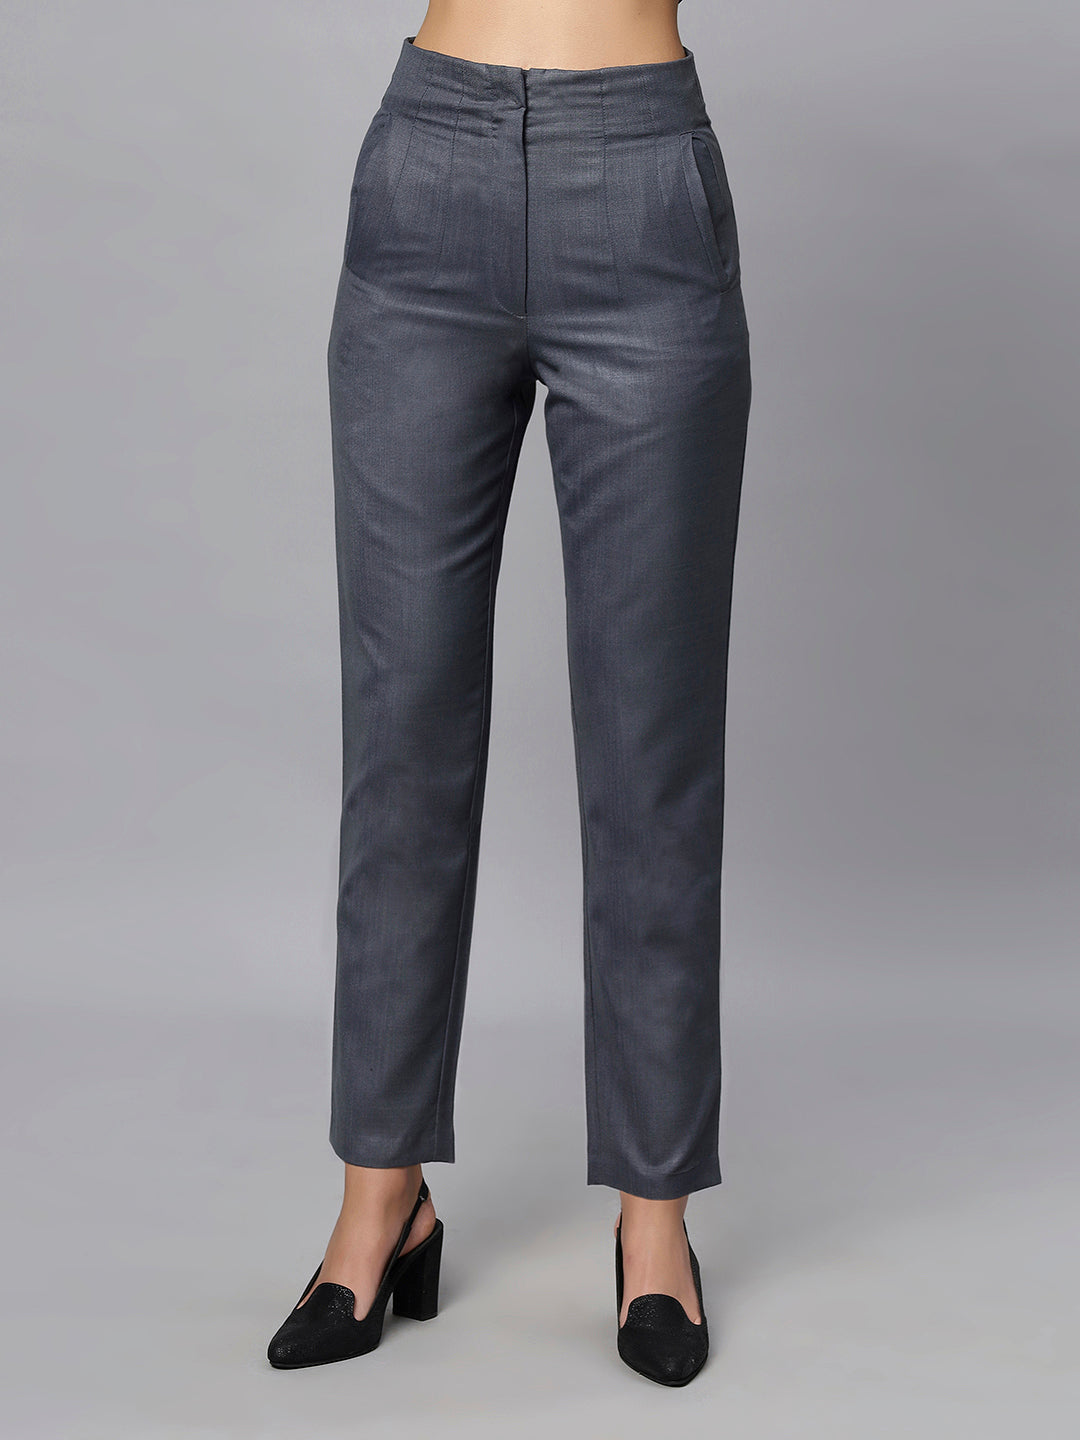 Formal Grey Blazer And Pants Set